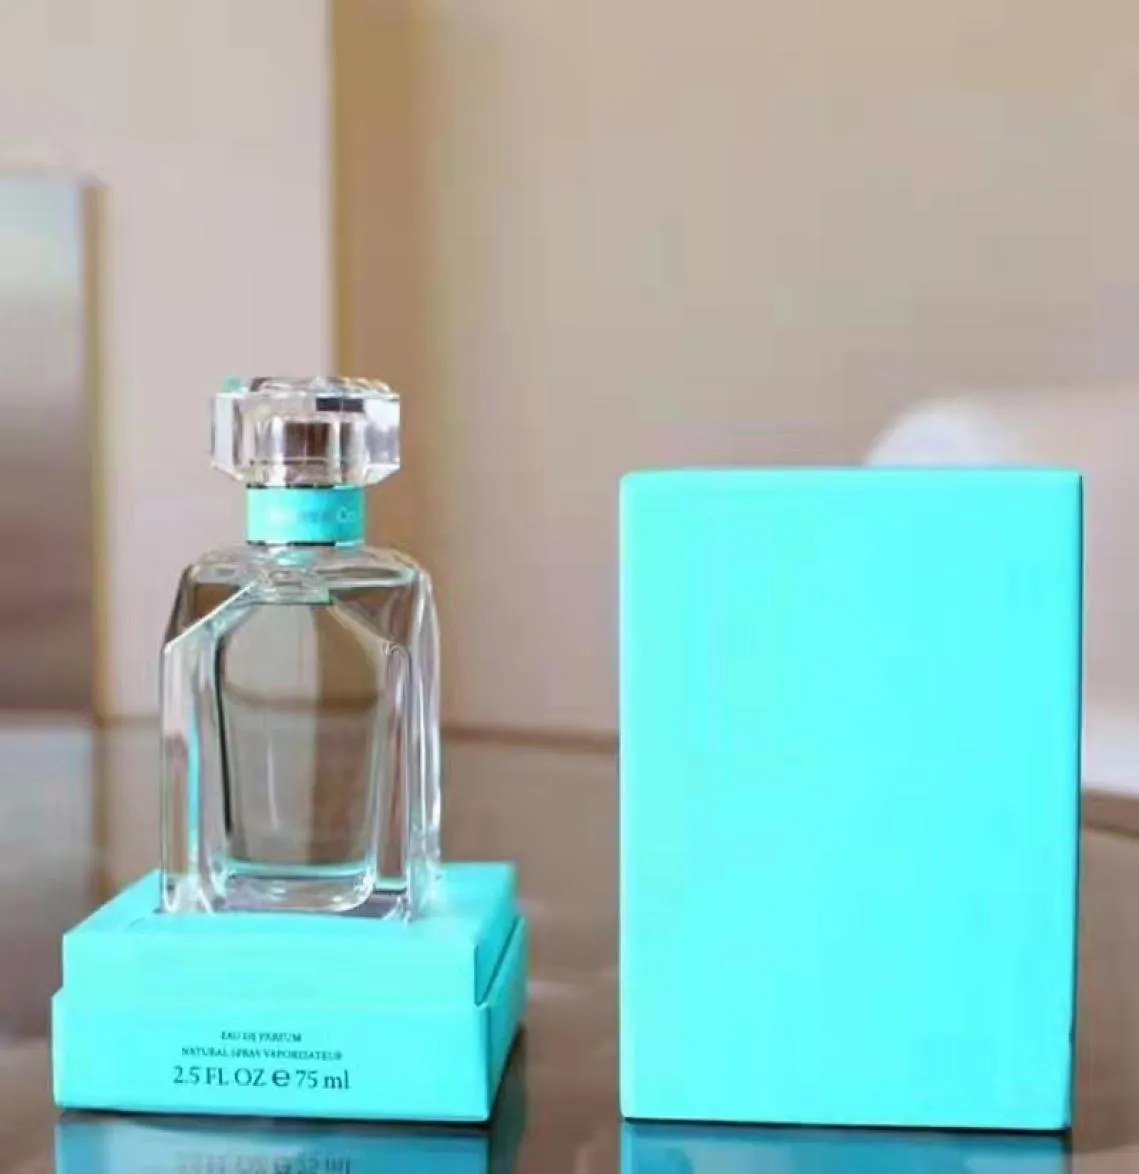 Top original wo parfum Spray sexy Perfume de marque durable016667417